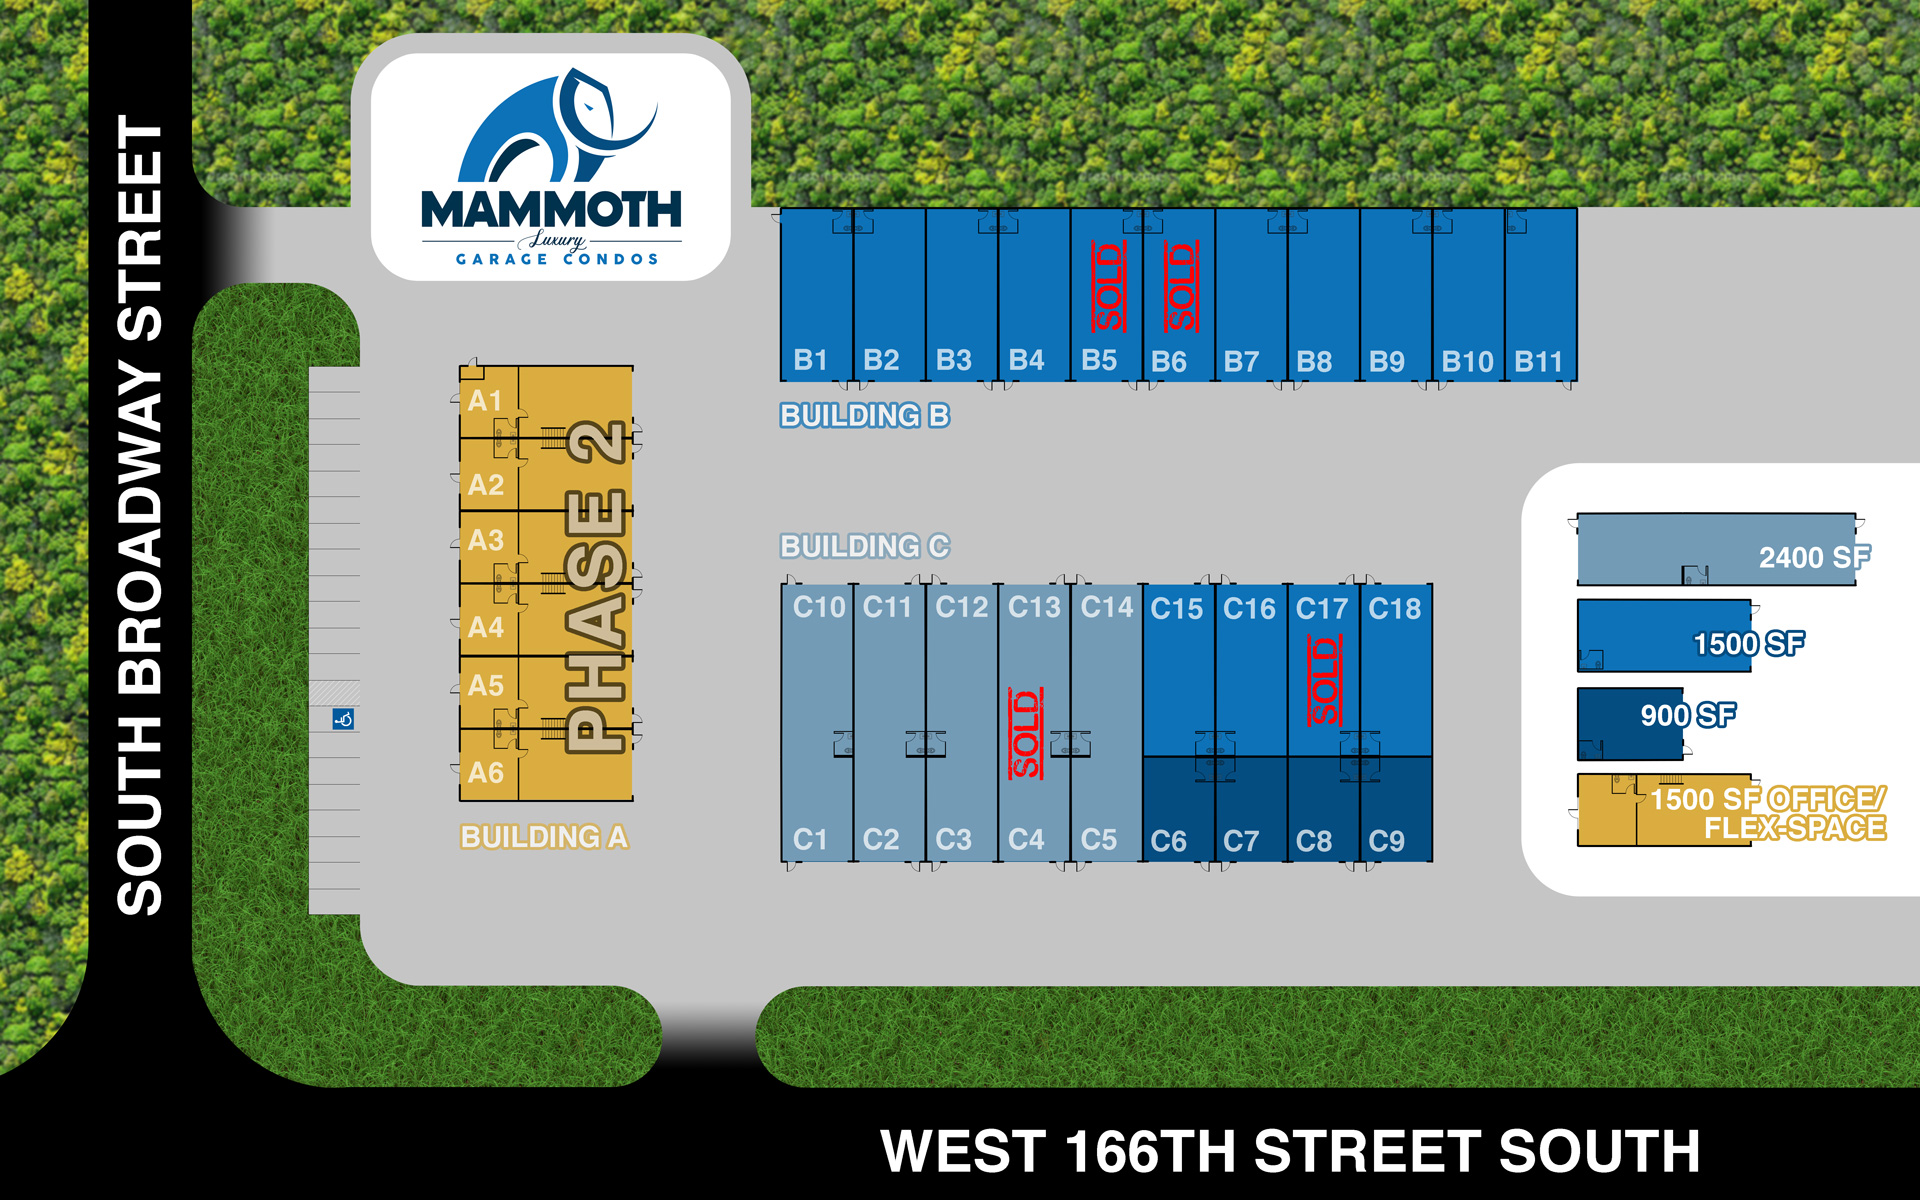 Mammoth Luxury Garage Condos - Site Map